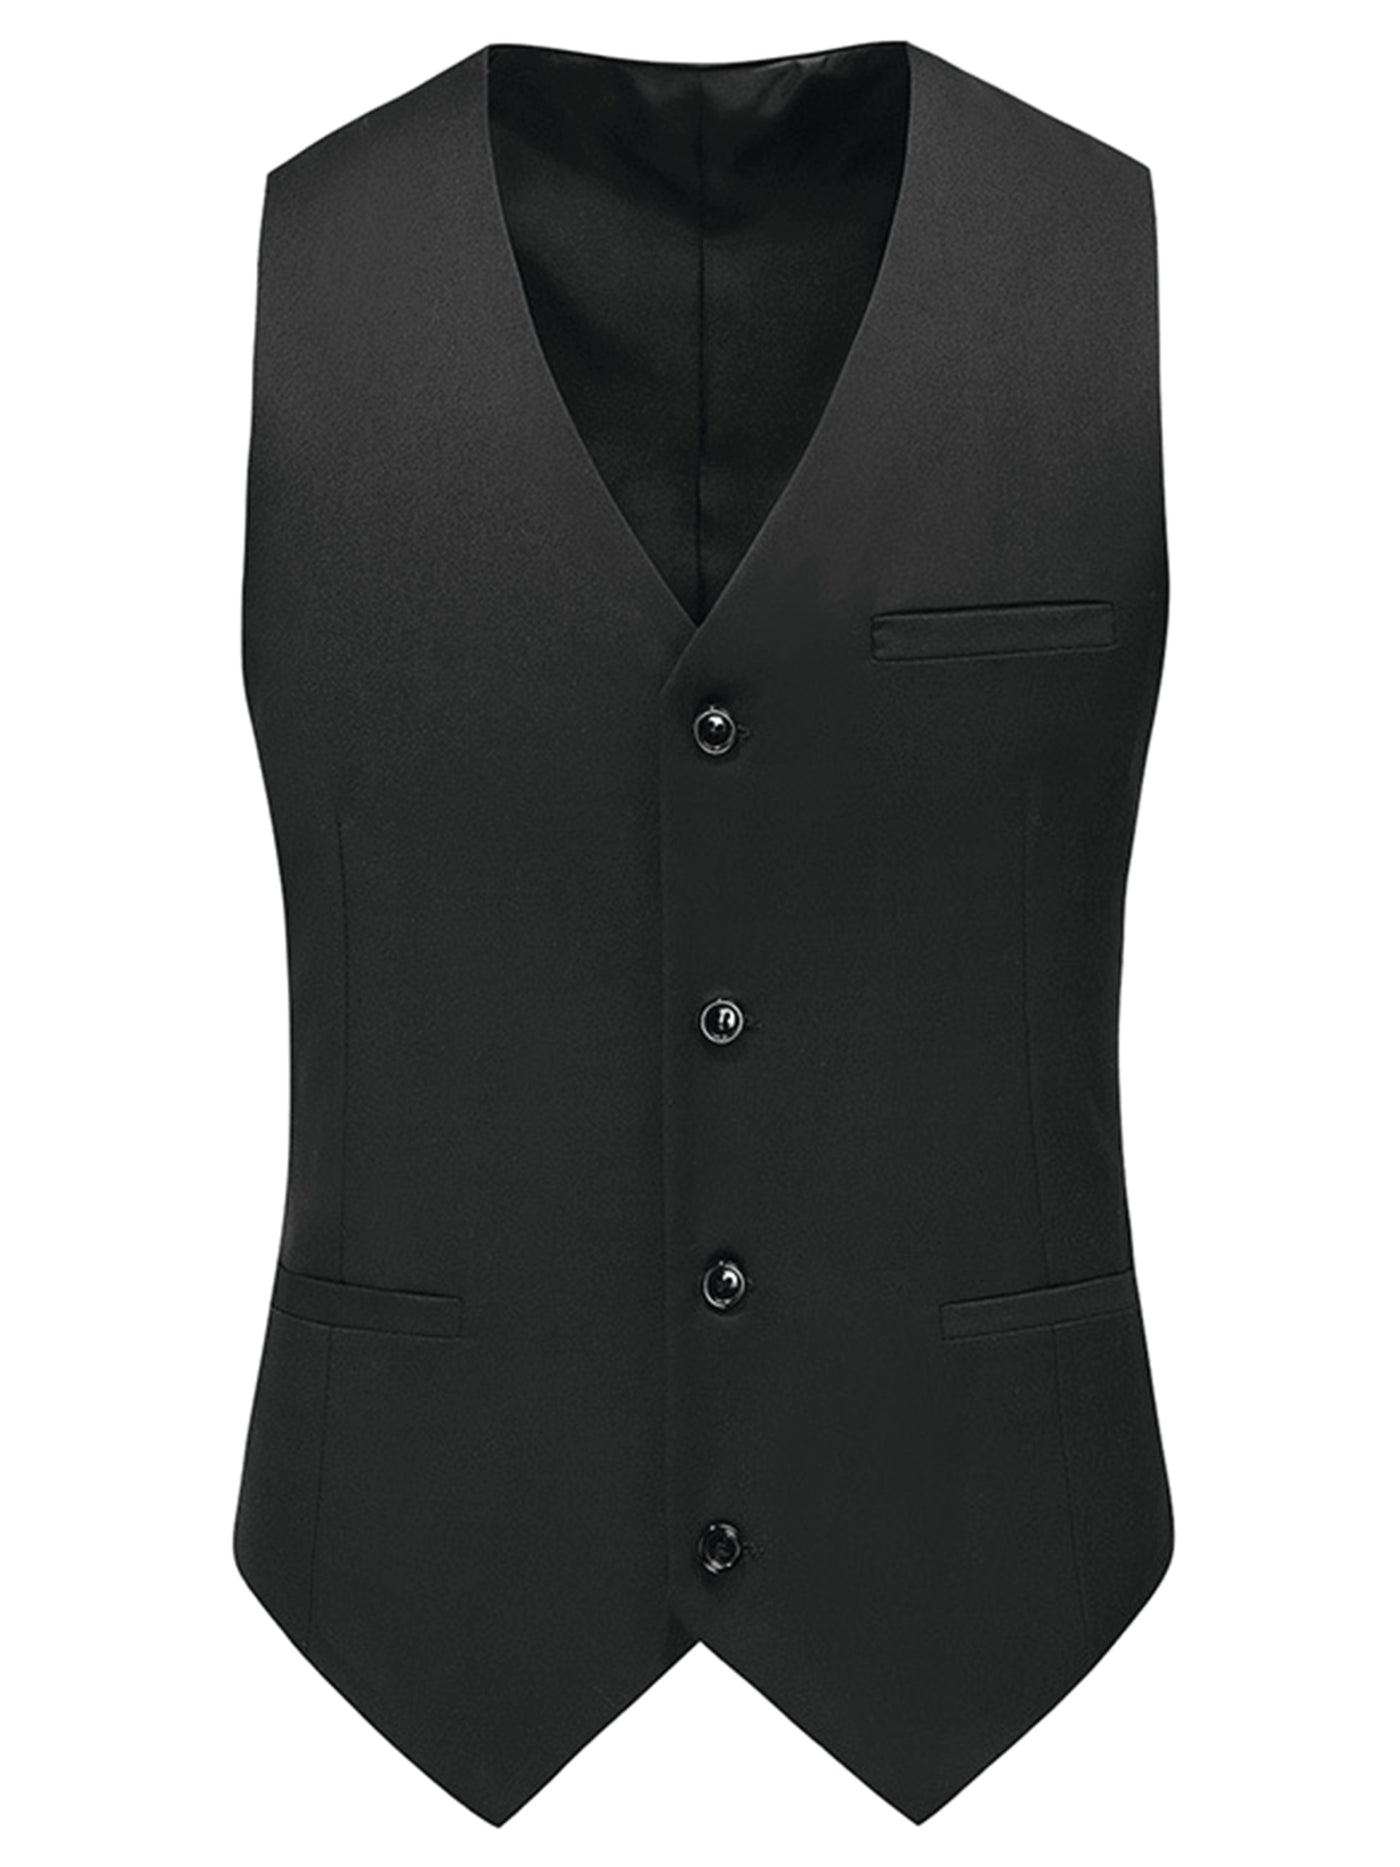 Bublédon Men's Suit Vest Slim Fit Sleeveless Solid Business Formal Dress Waistcoat